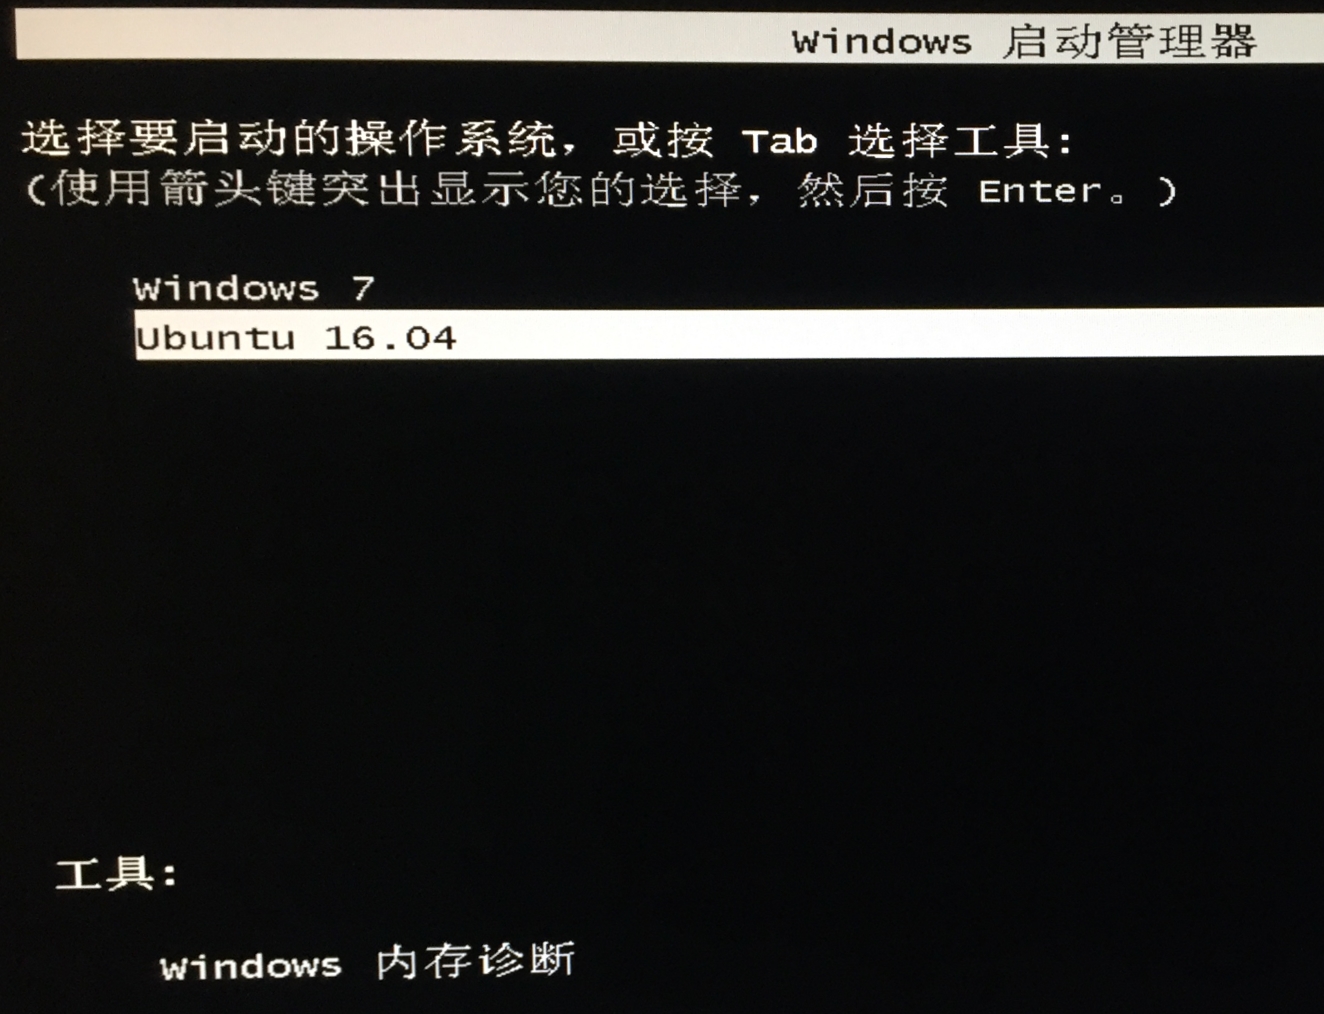 win 7 and ubuntu 16.04 boot